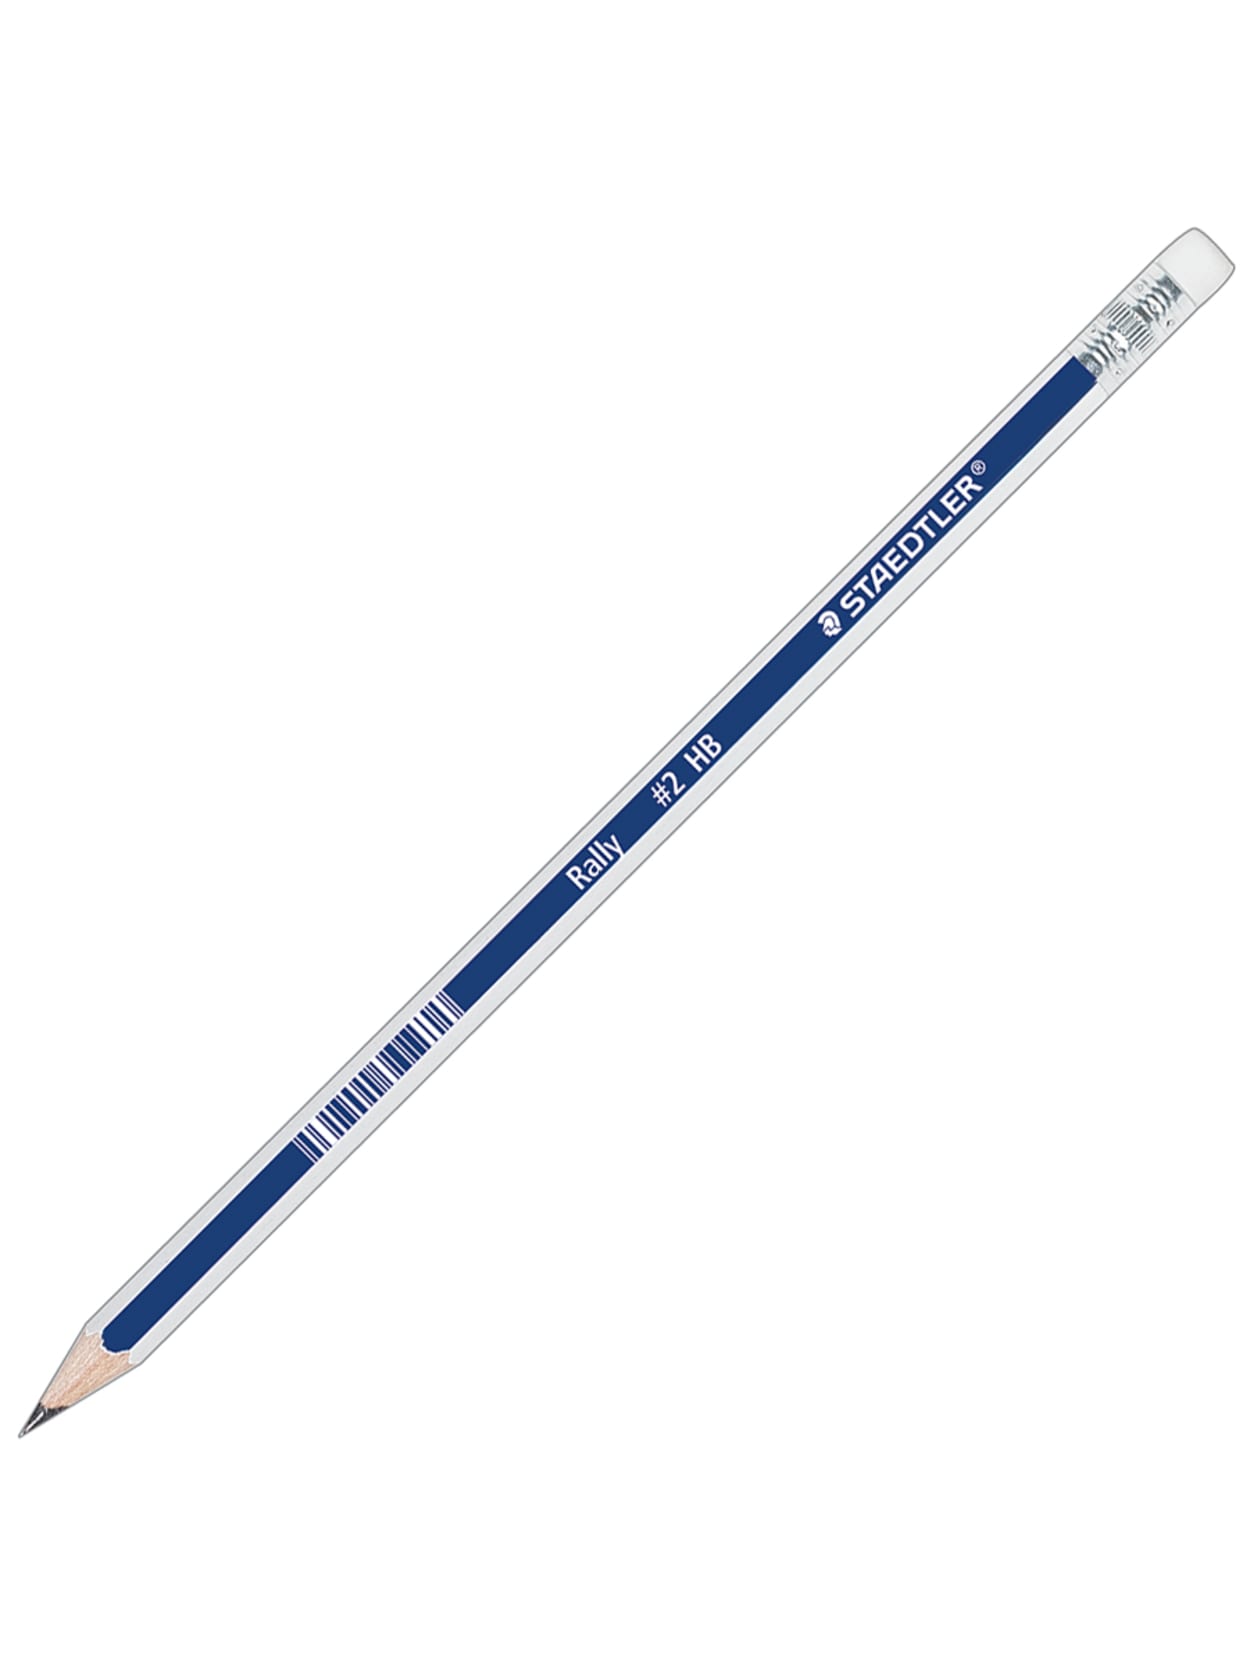 white hb pencils